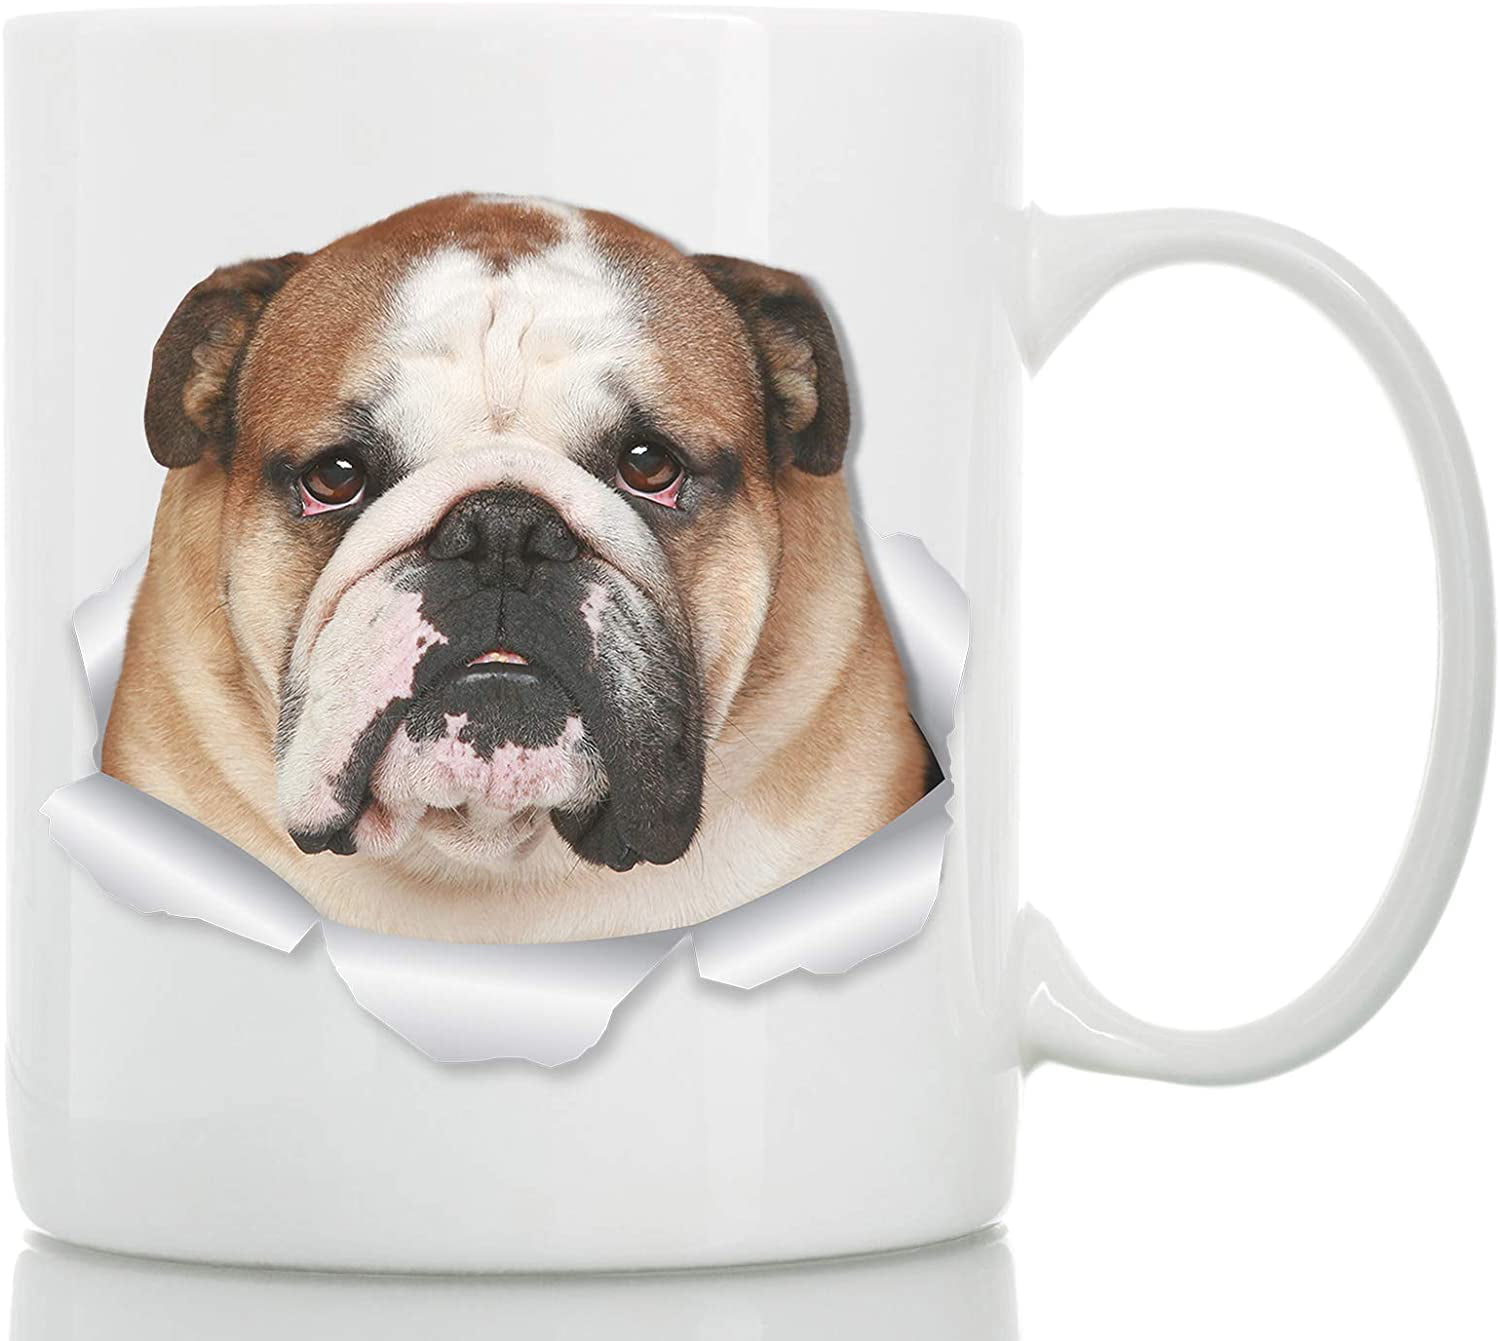 Diner Mug – Hanx Coffee